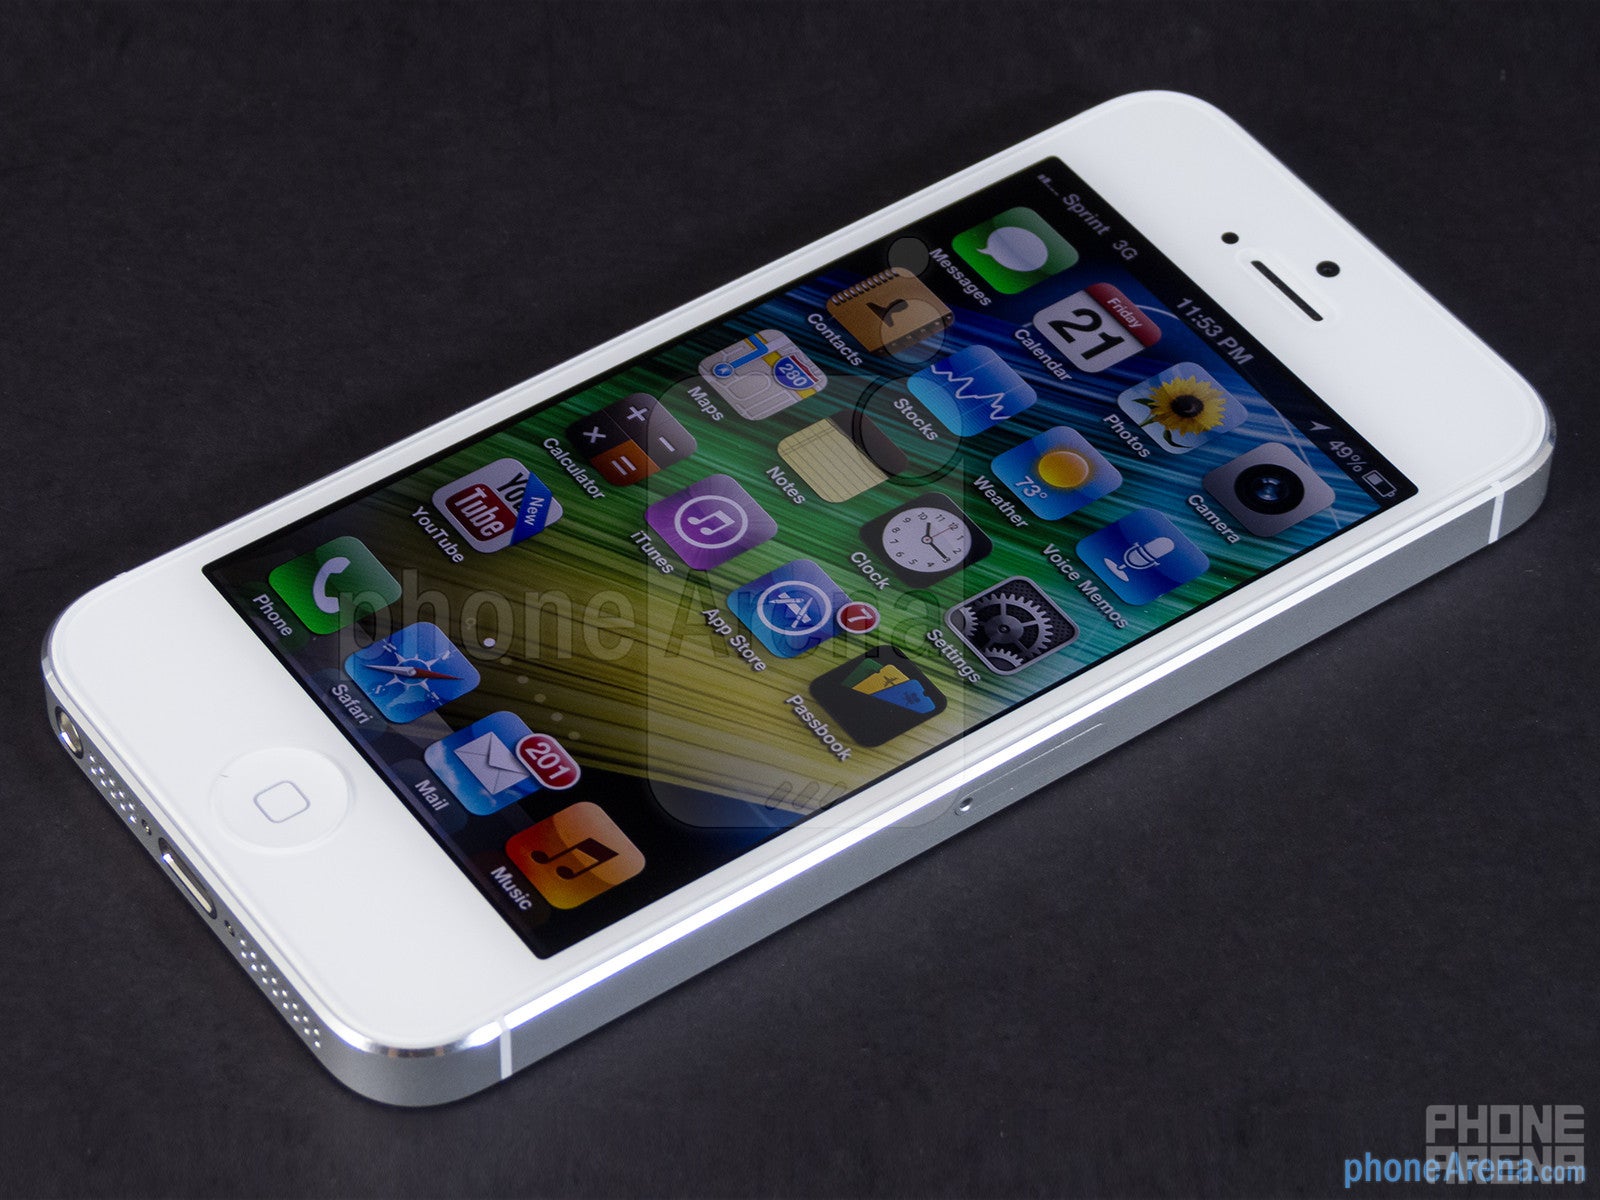 Apple iPhone 5s Review - PhoneArena